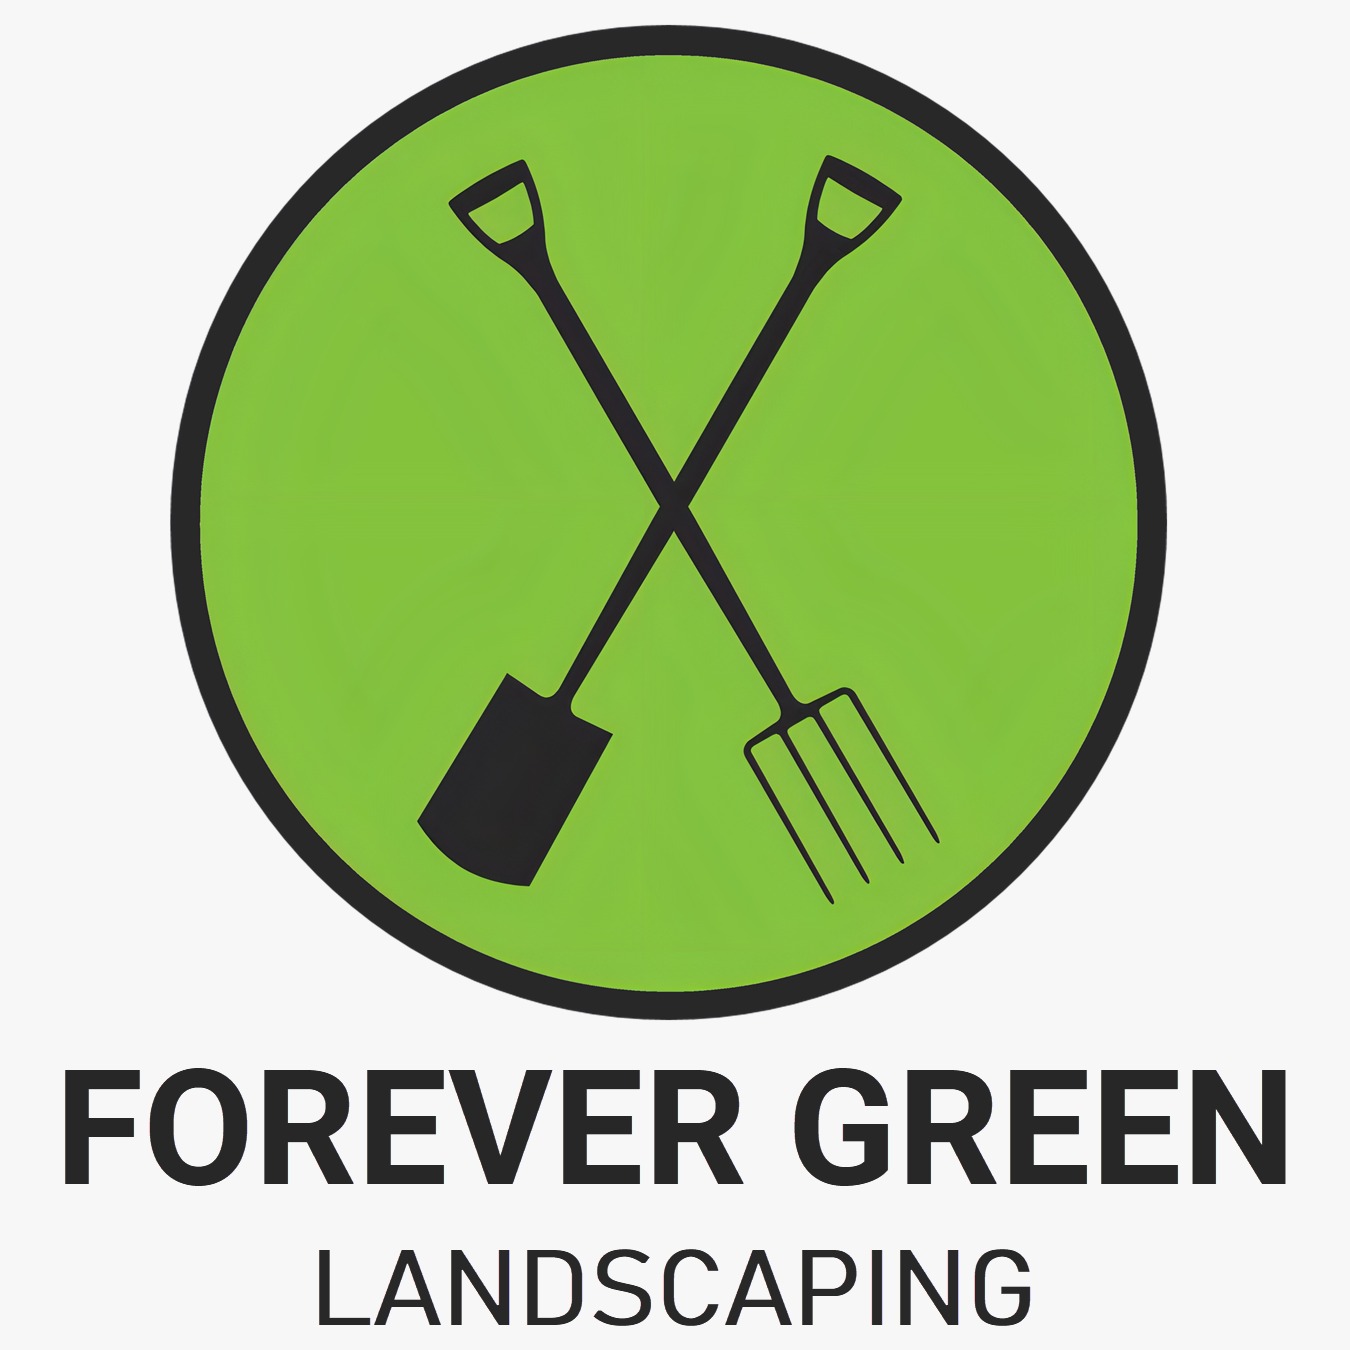 Forever green landscaping limted